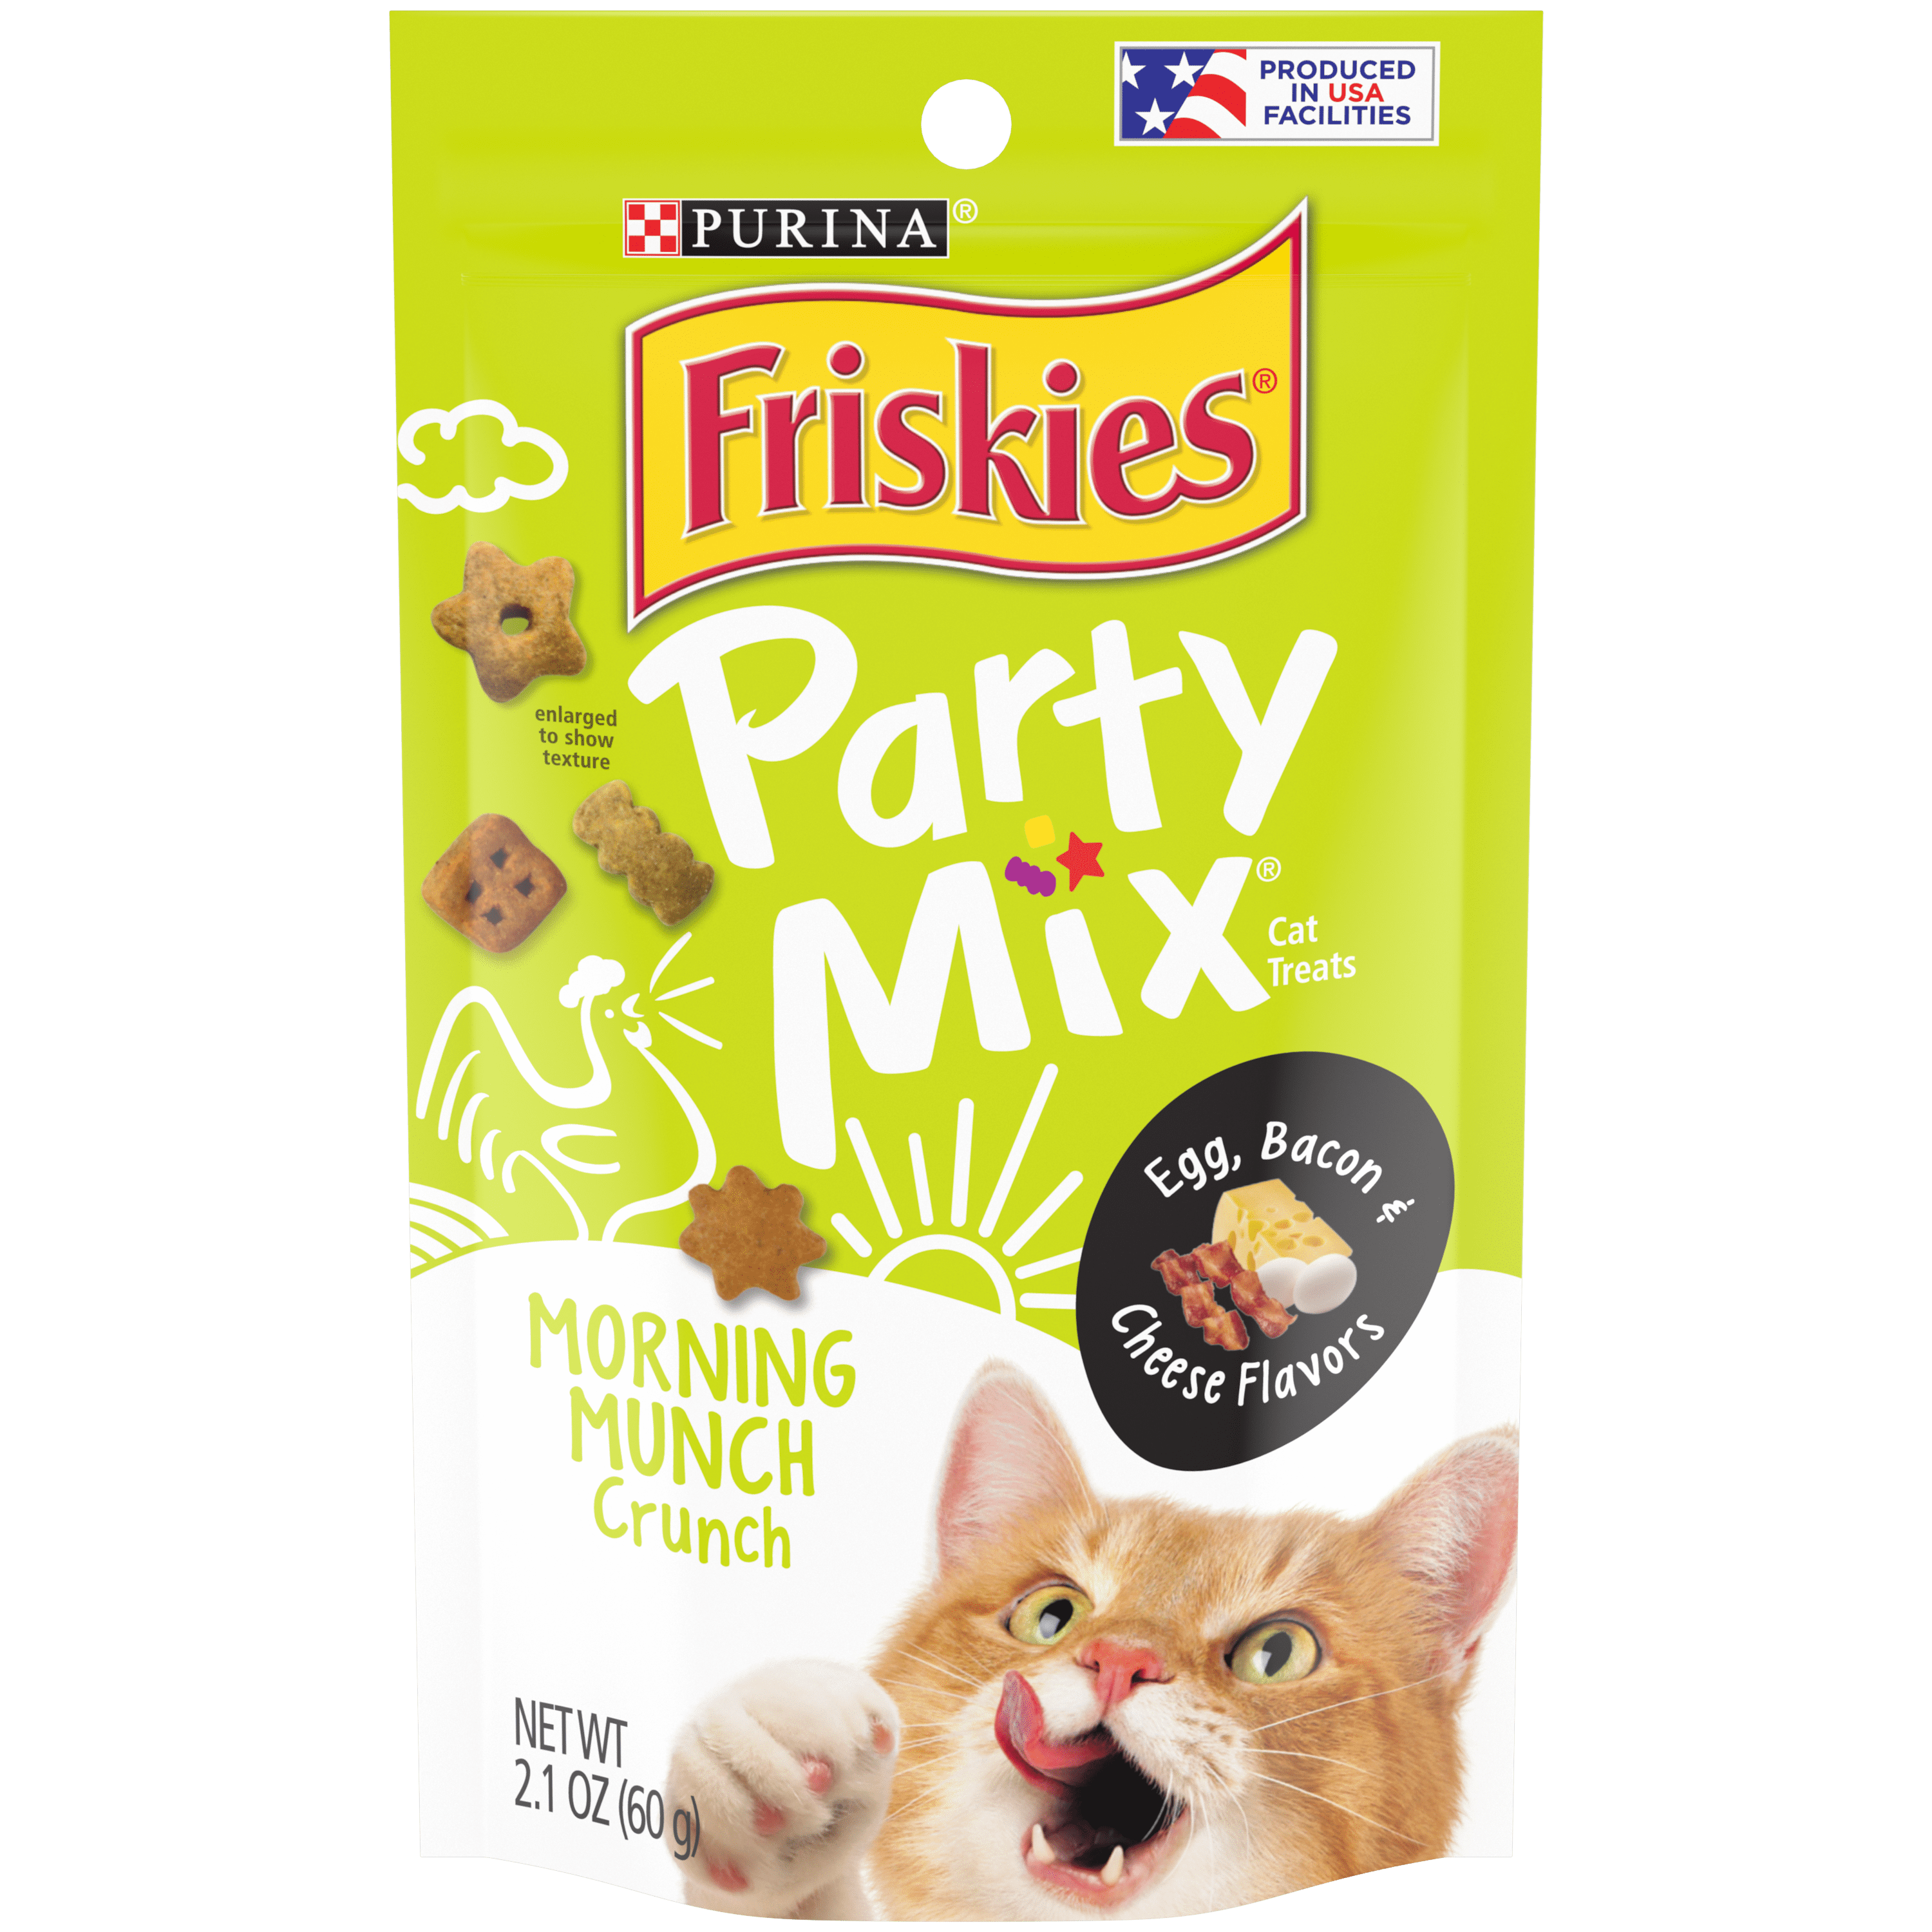 Friskies Cat Treats, Party Mix Crunch Morning Munch 2.1 oz. Pouch